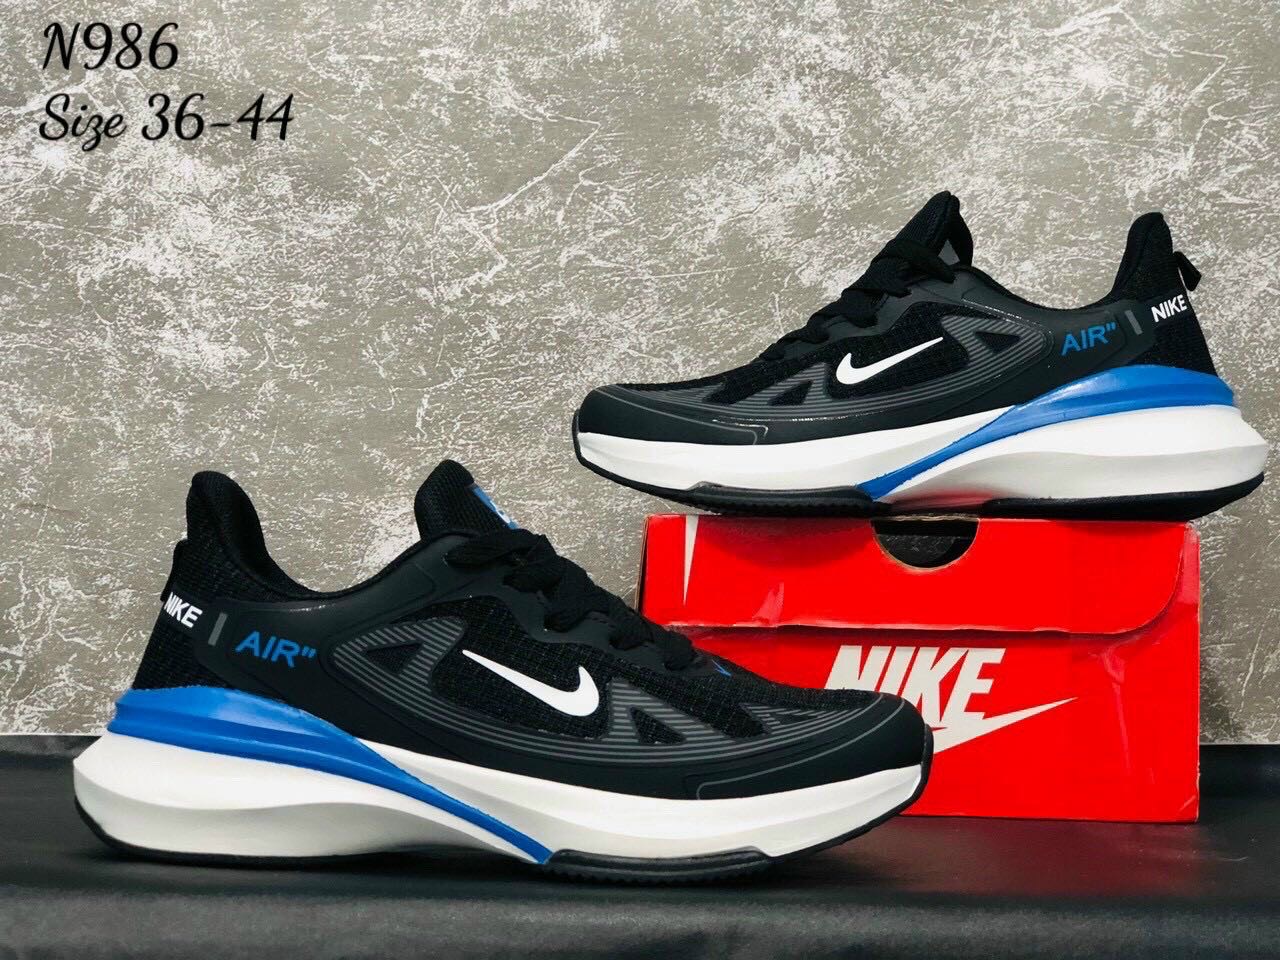 Giày Nike Nữ đen Xanh F100